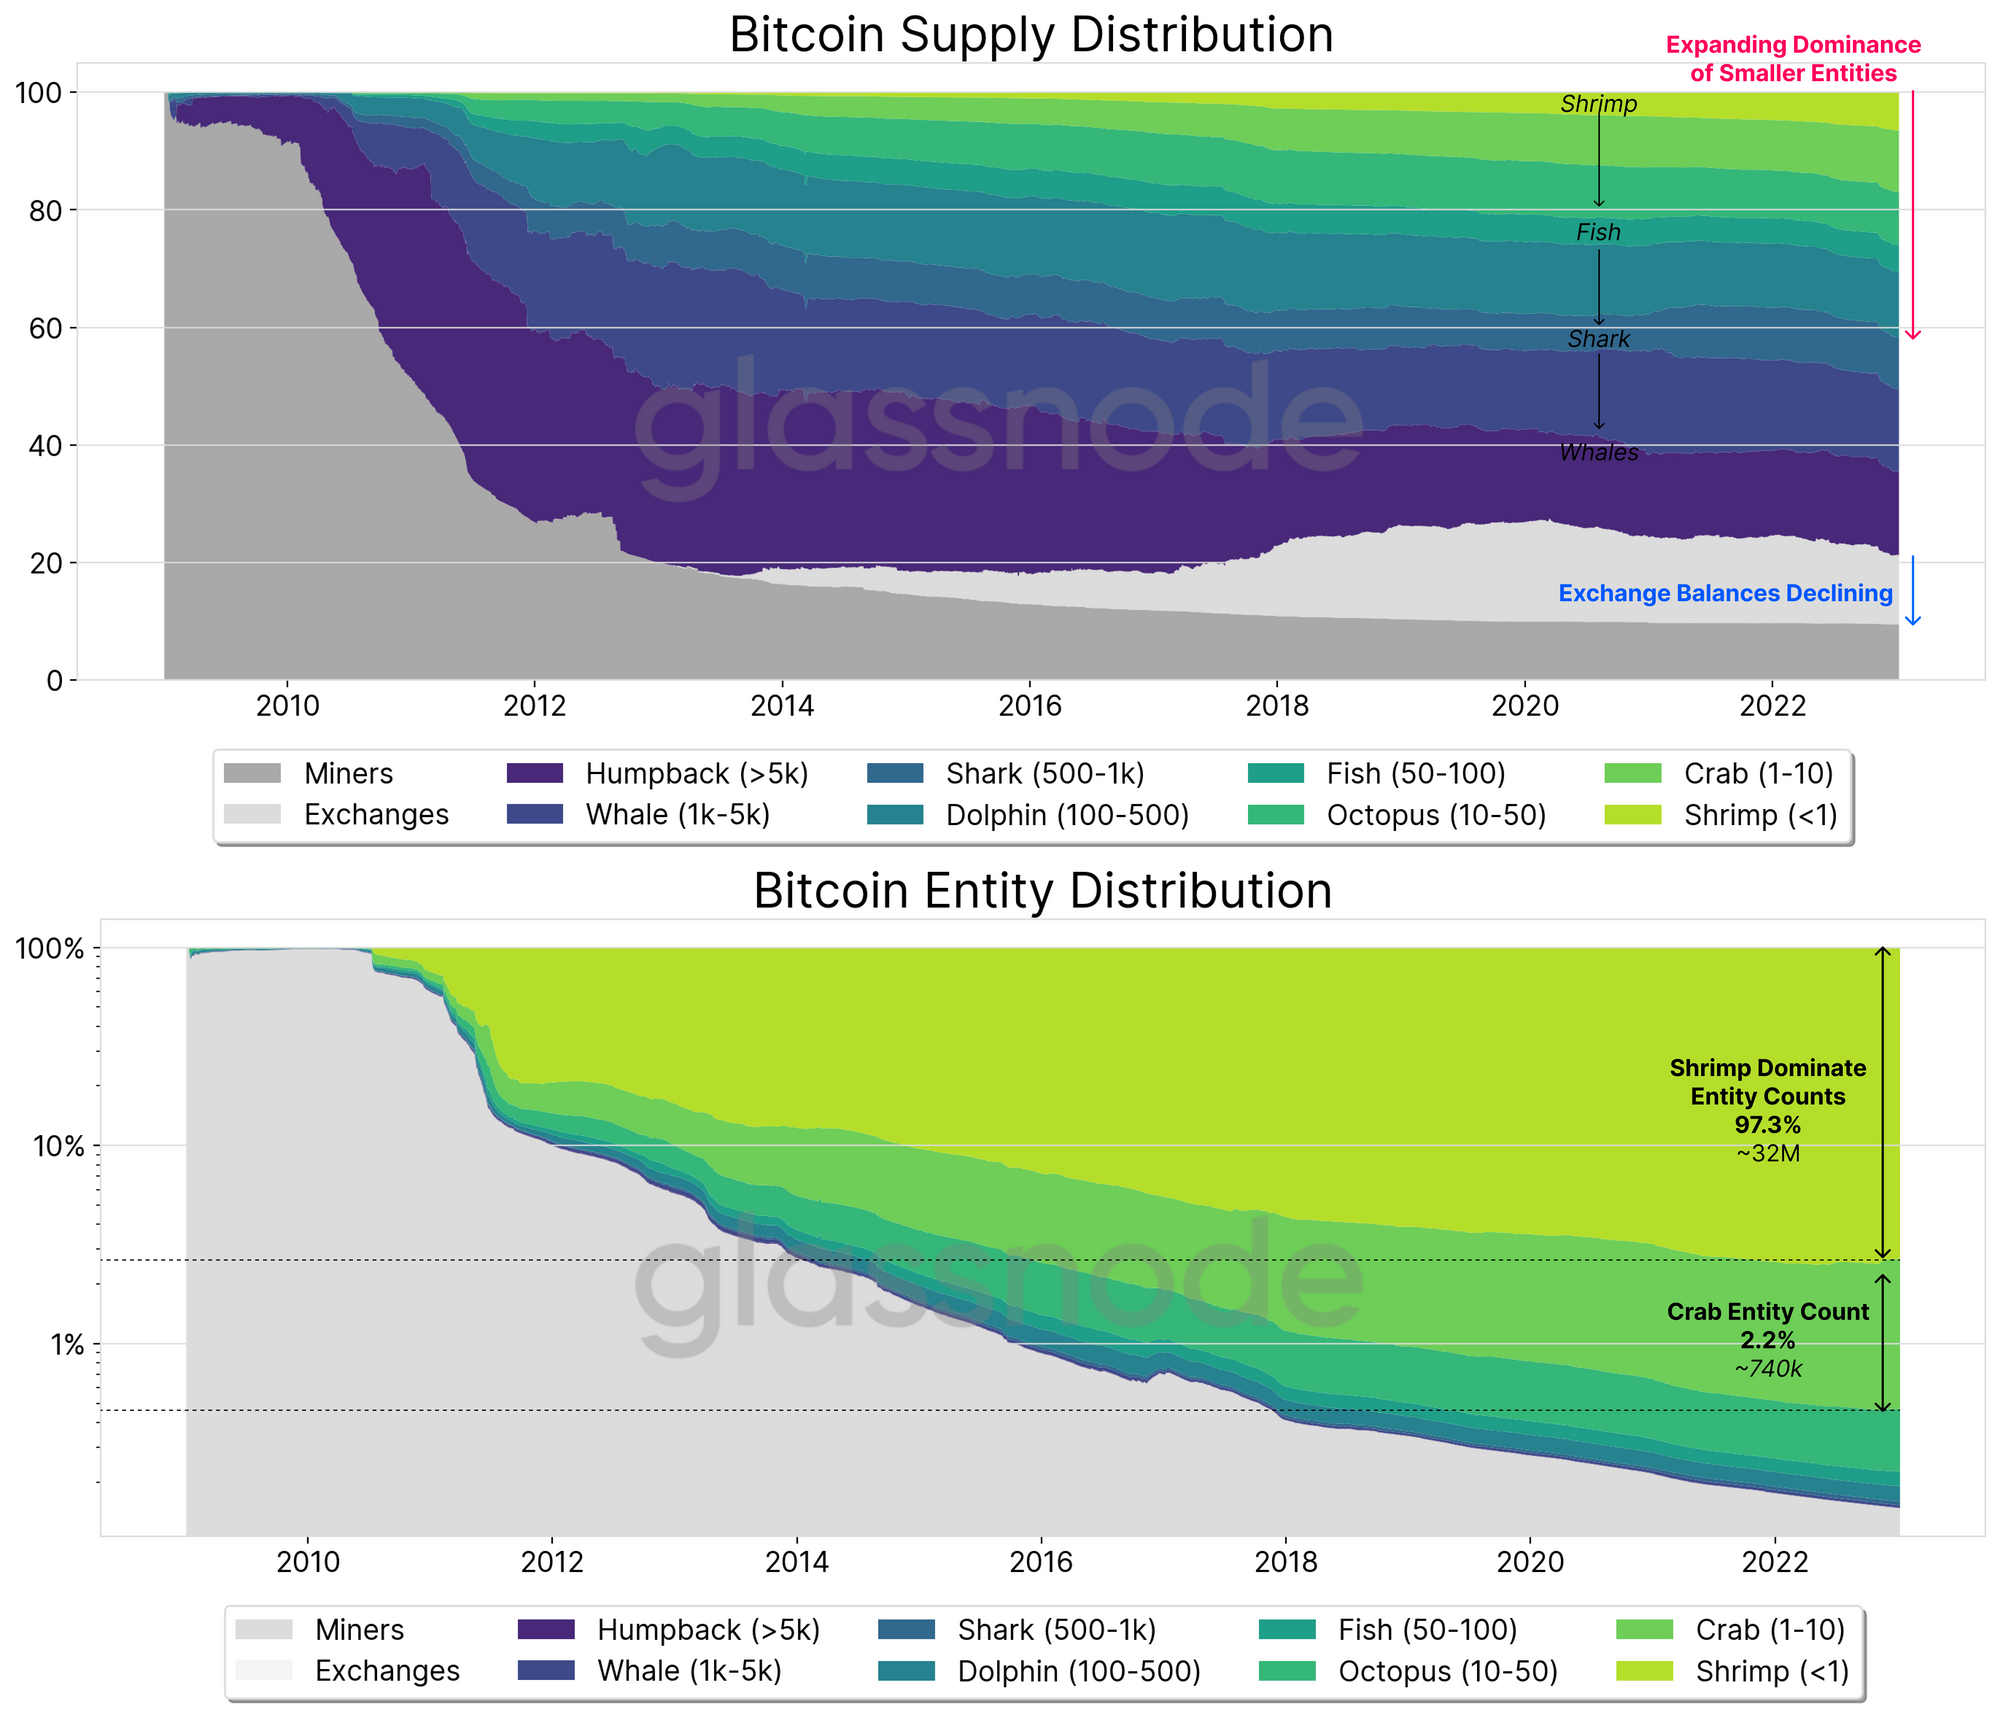 Bitcoin Supply Distribution